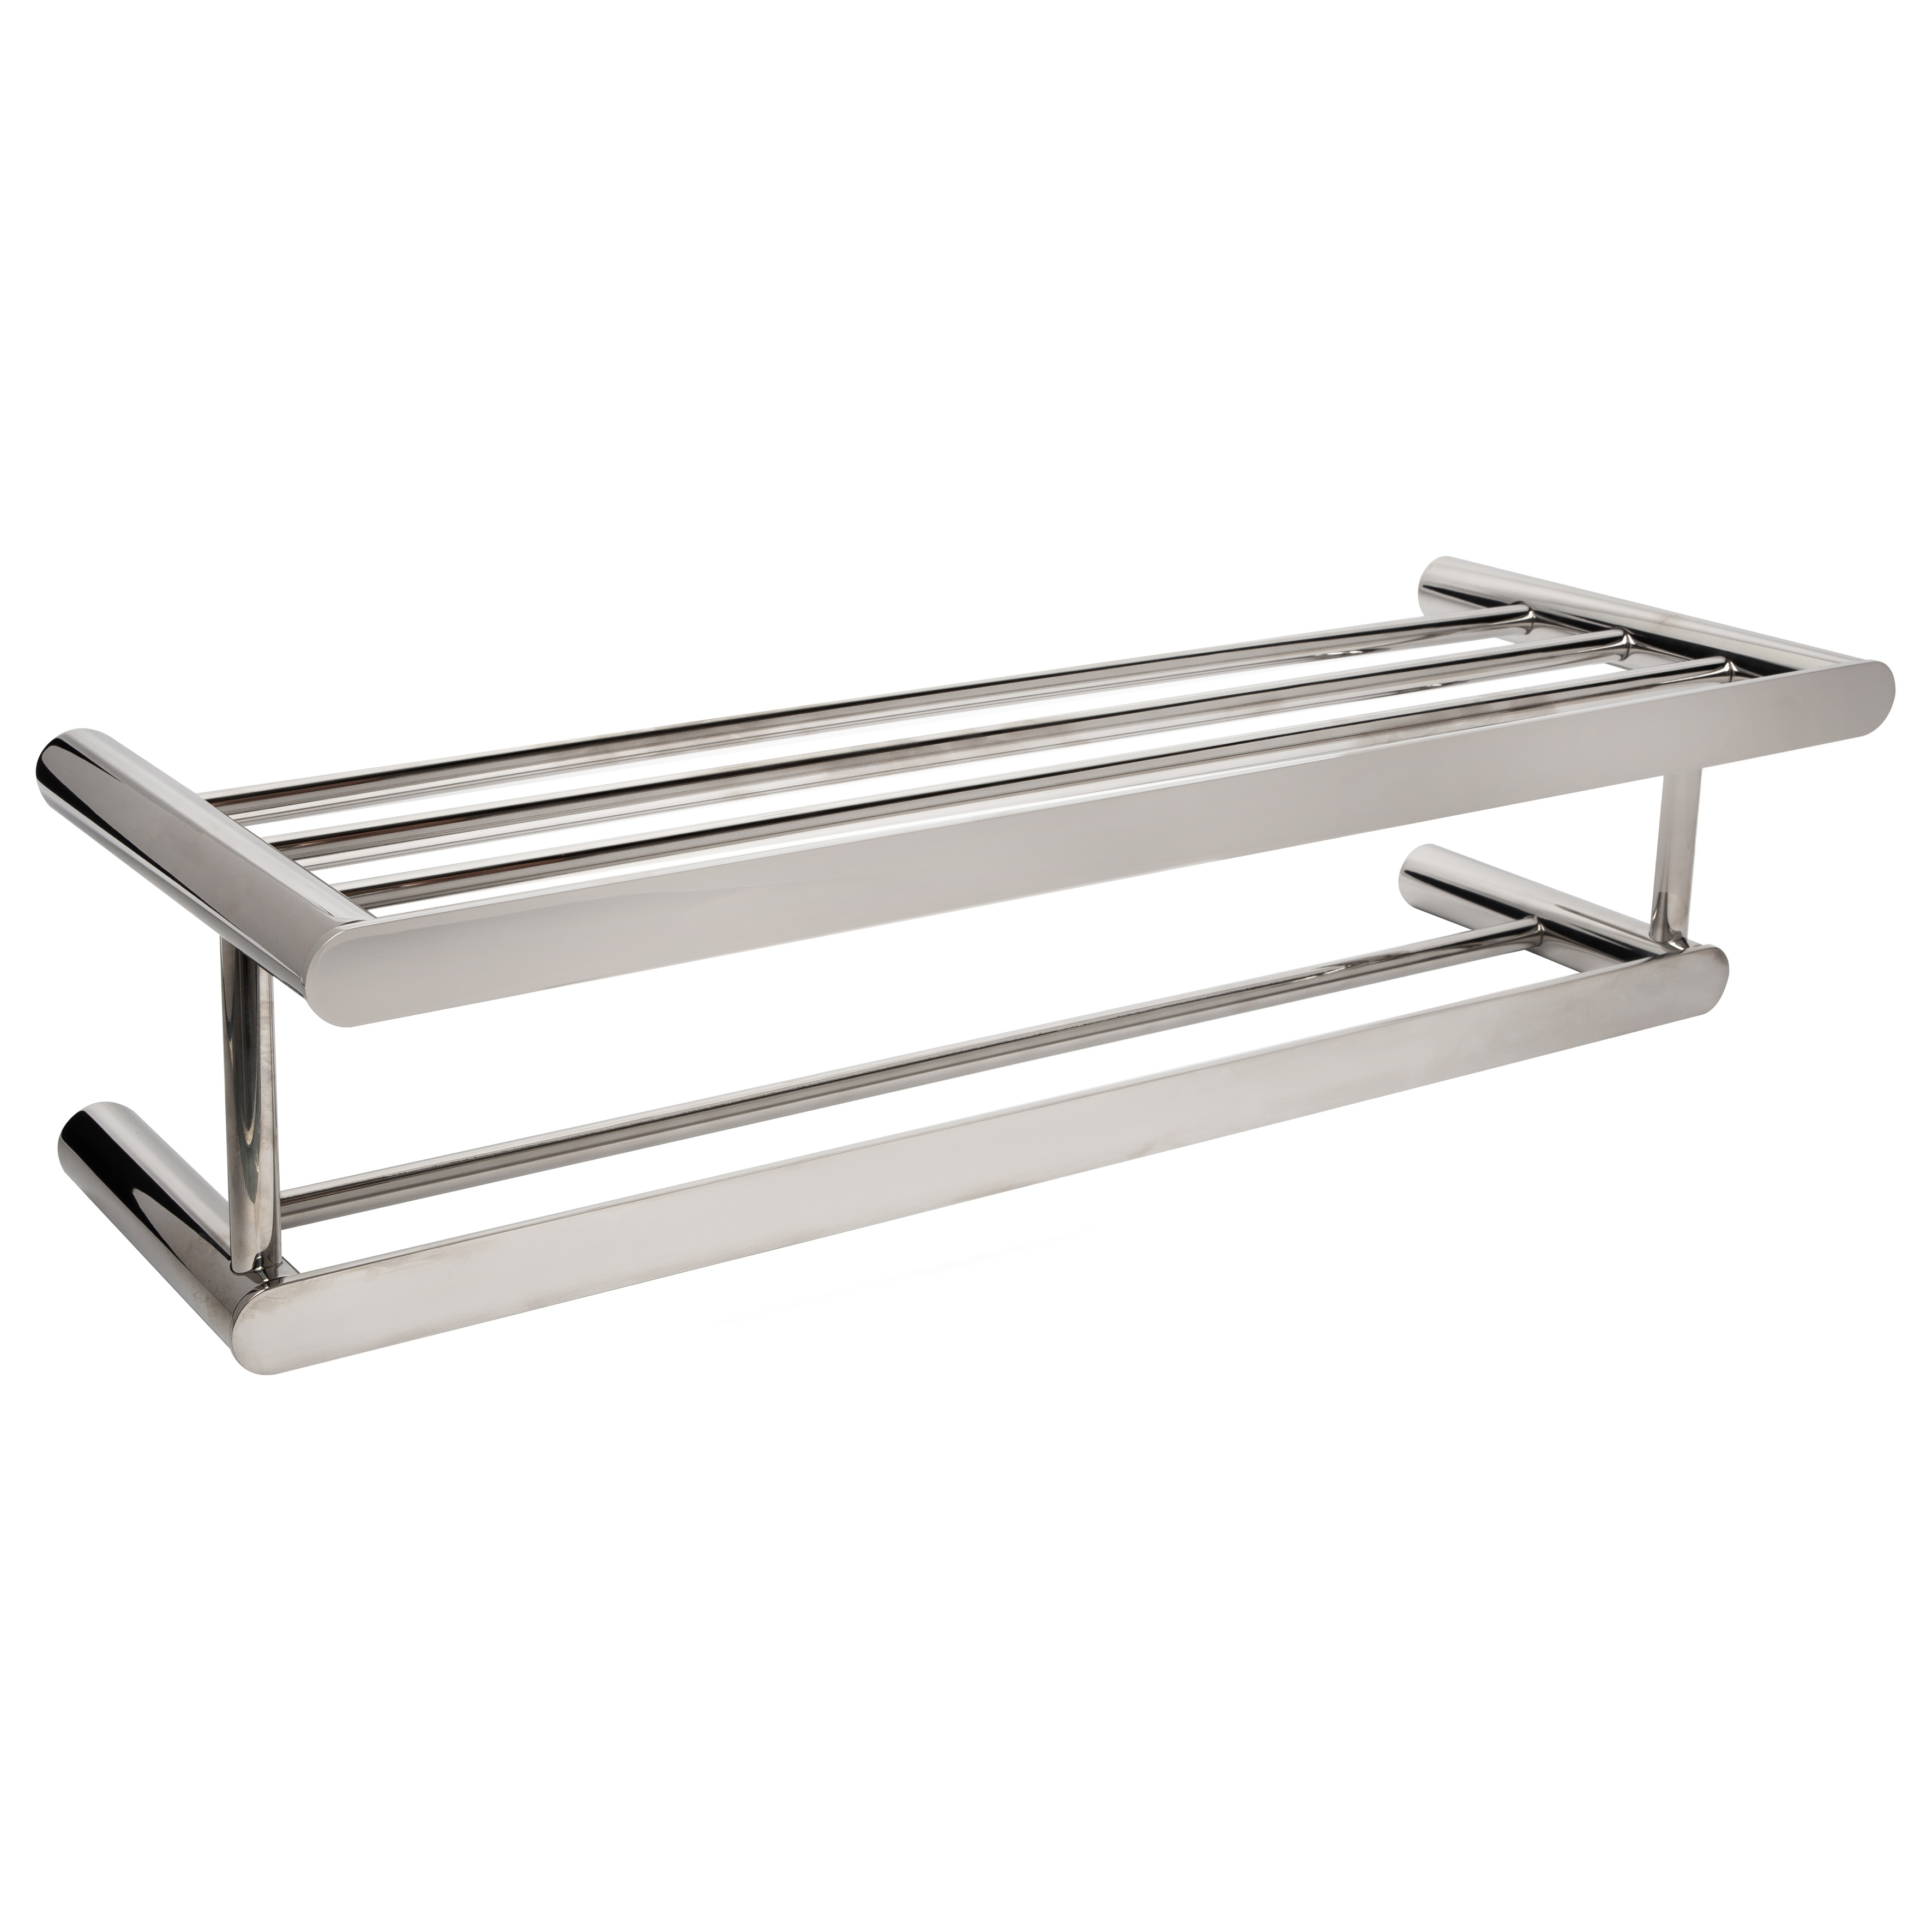 Stainless Steel Bathroom Shelf & Towel Rail